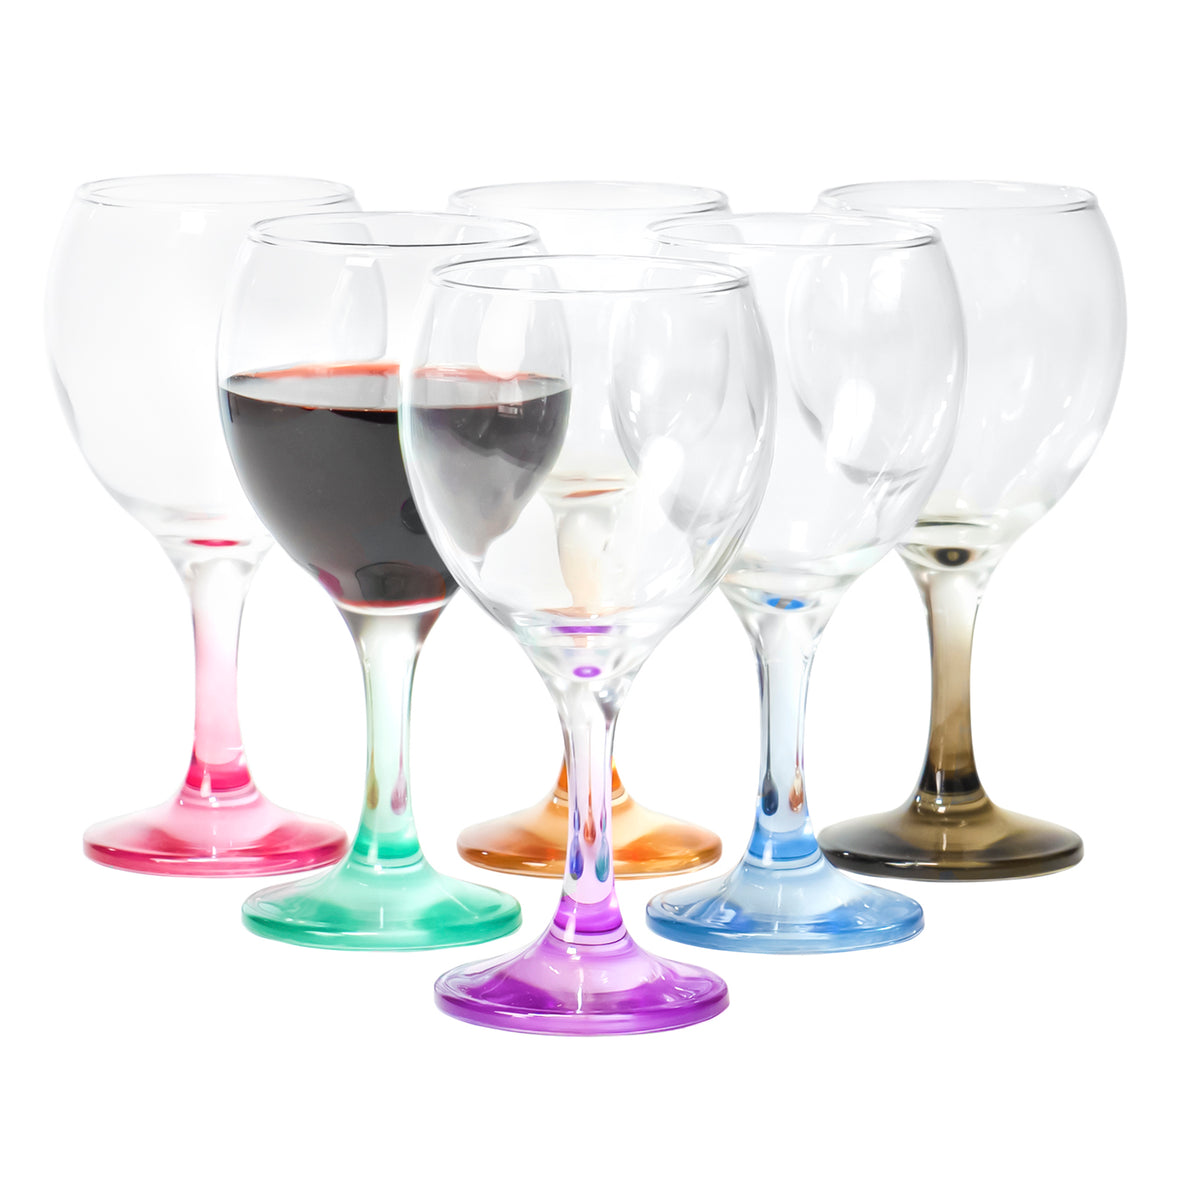 LAV Small Wine Glasses Set of 6 - 8 oz Clear White Wine Glasses Short Stem